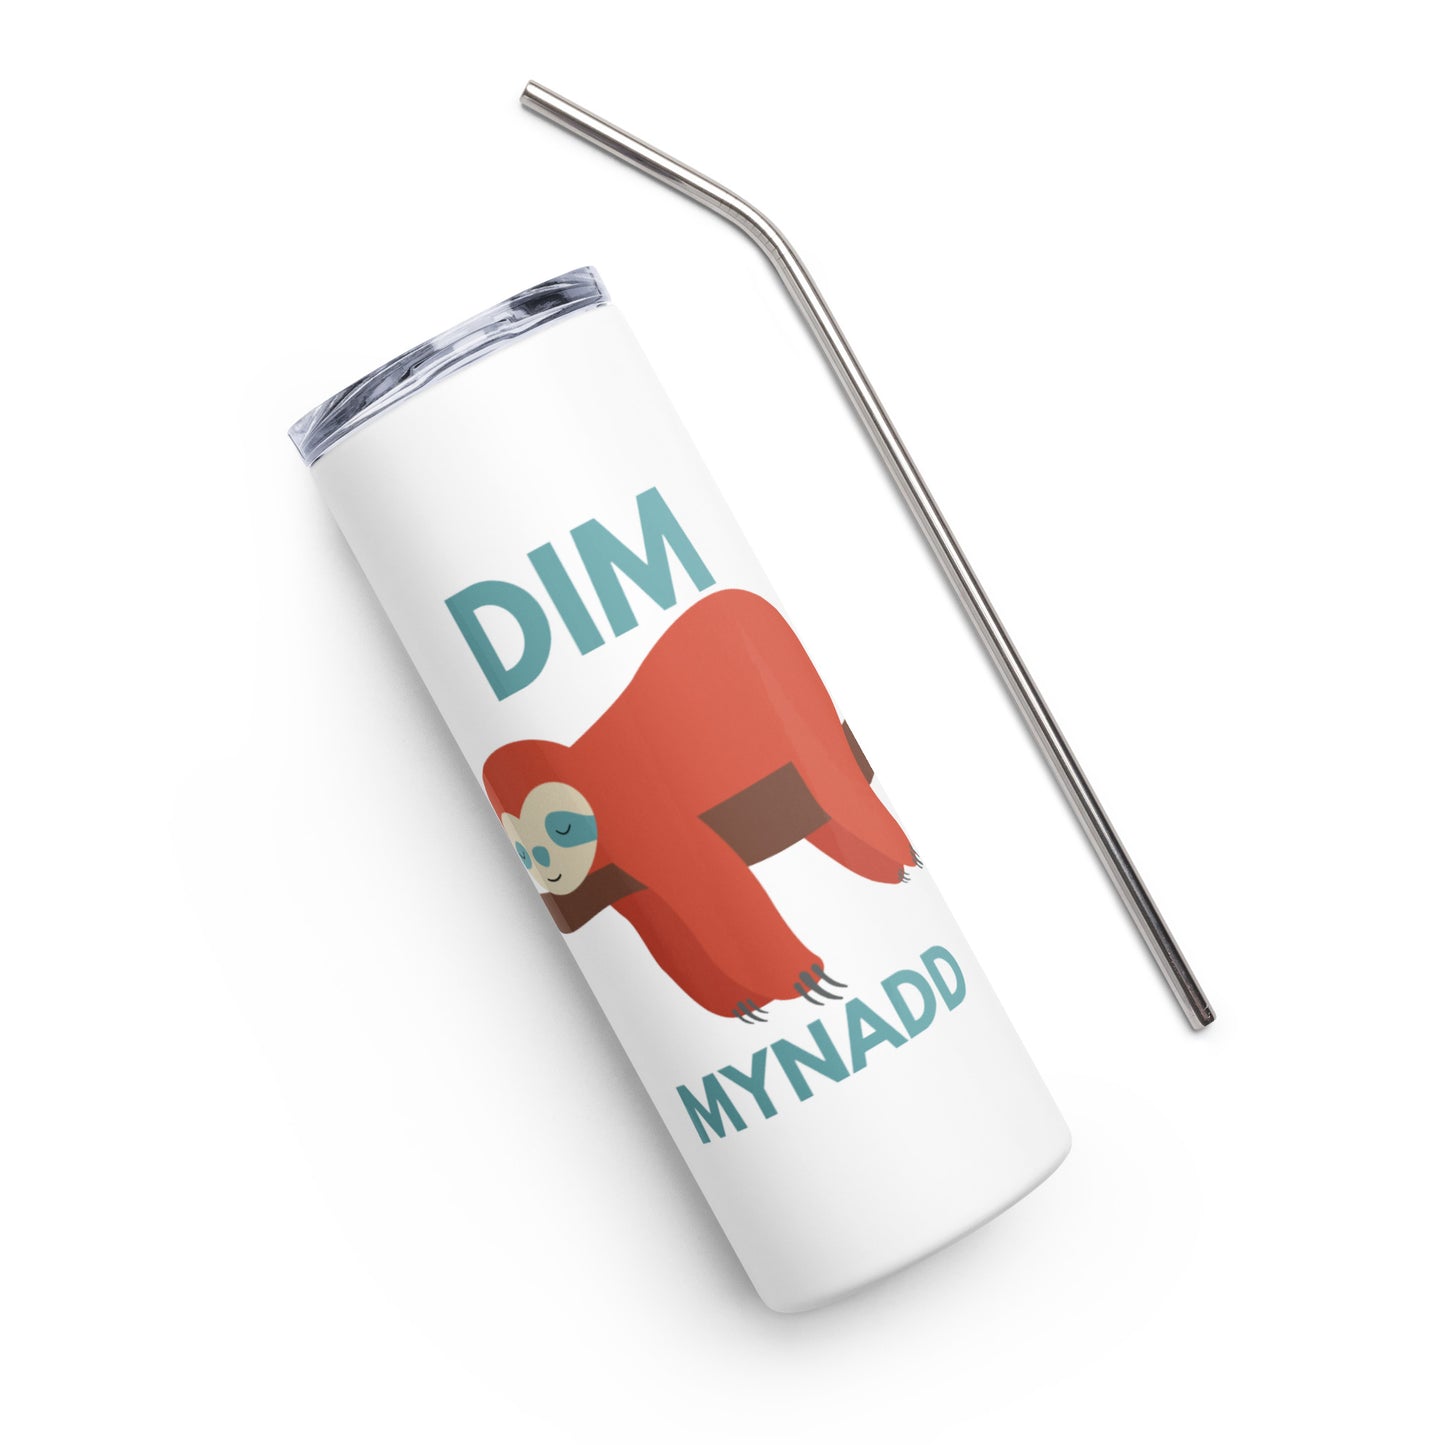 Dim Mynadd - Stainless steel tumbler